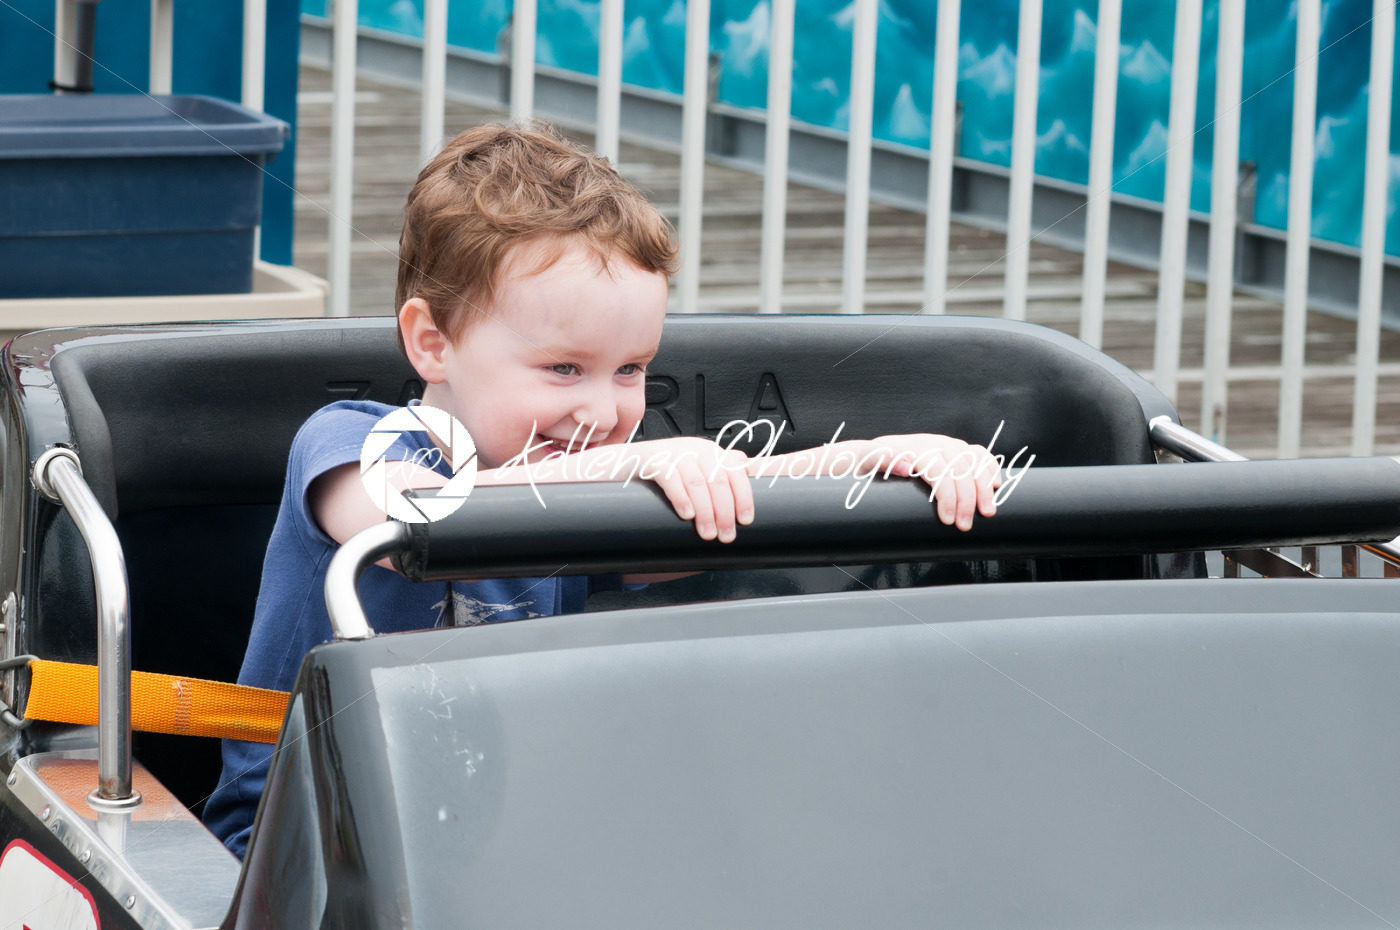 Young toddler boy having fun on boardwalk amusement ride - Kelleher Photography Store